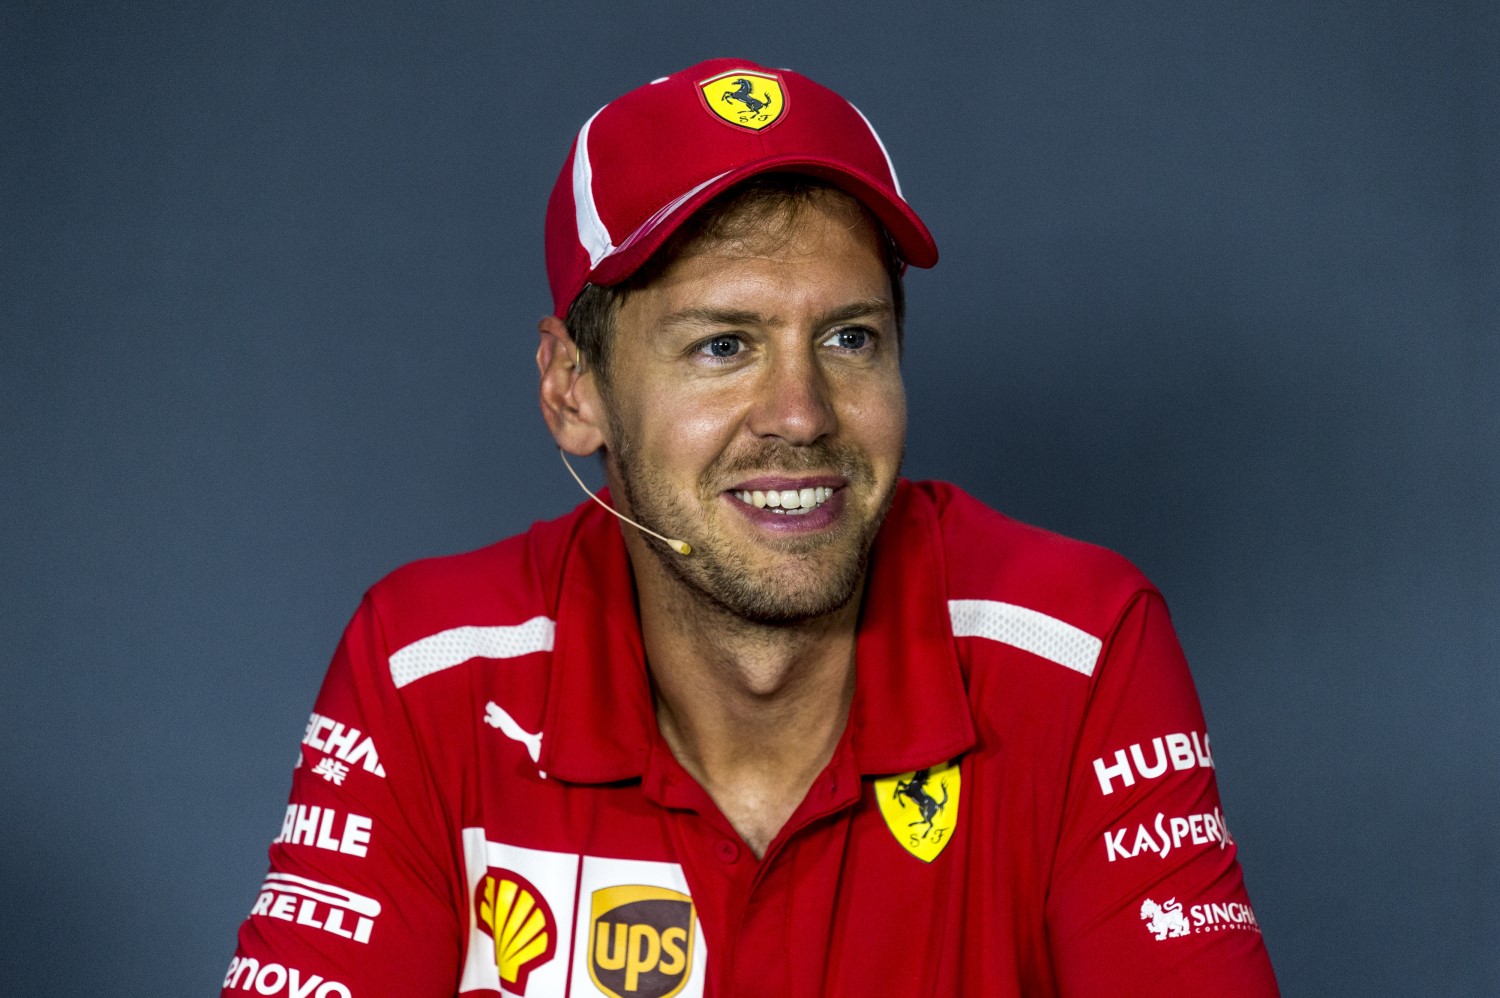 Sebastian Vettel blew his title chances